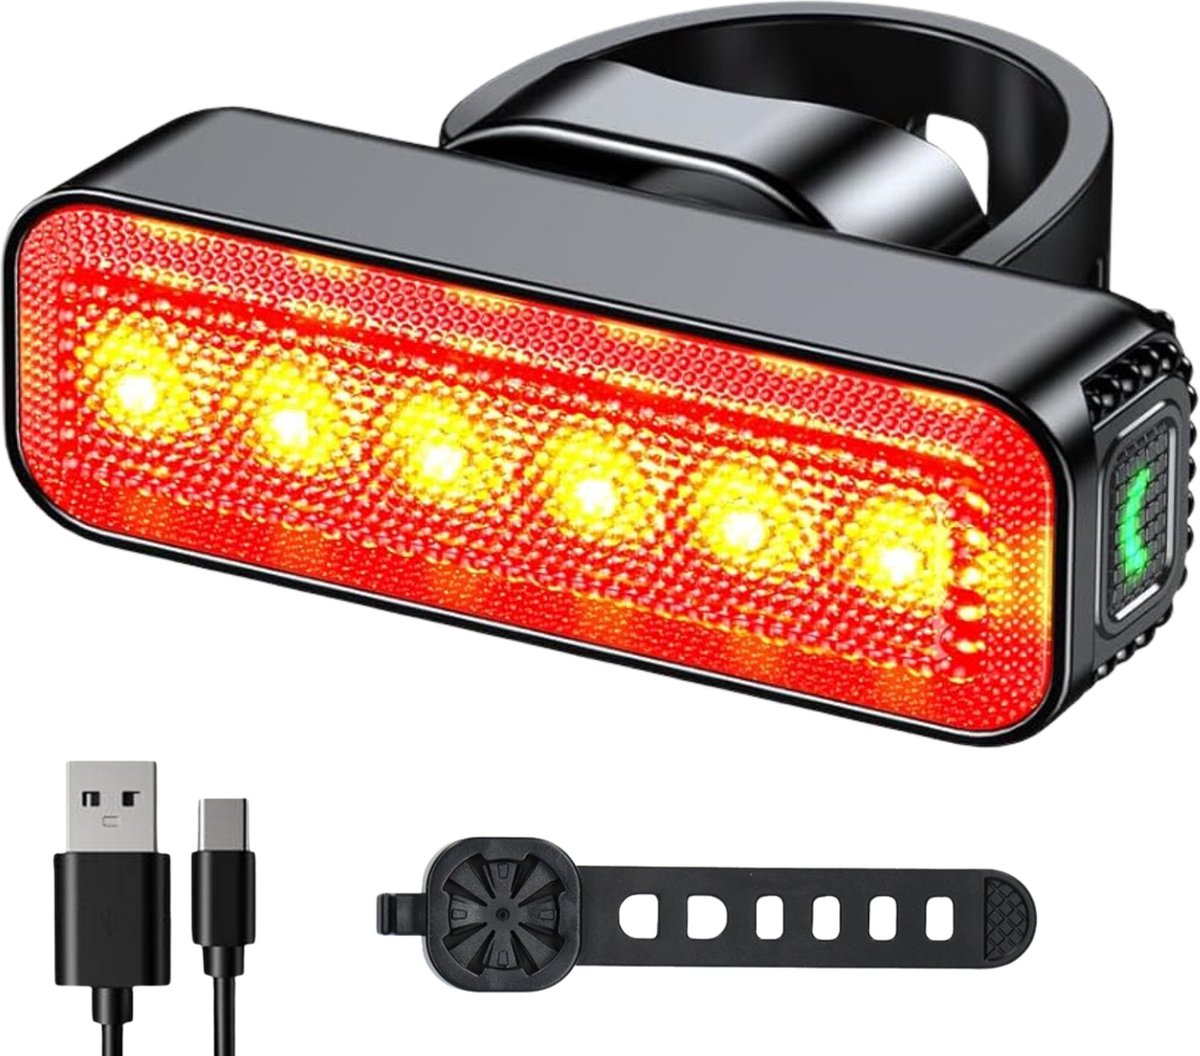 Inlustro Fietslamp LED Achterlicht - Waterdicht Fietslampje - Fietslicht - USB Oplaadbaar - Rood